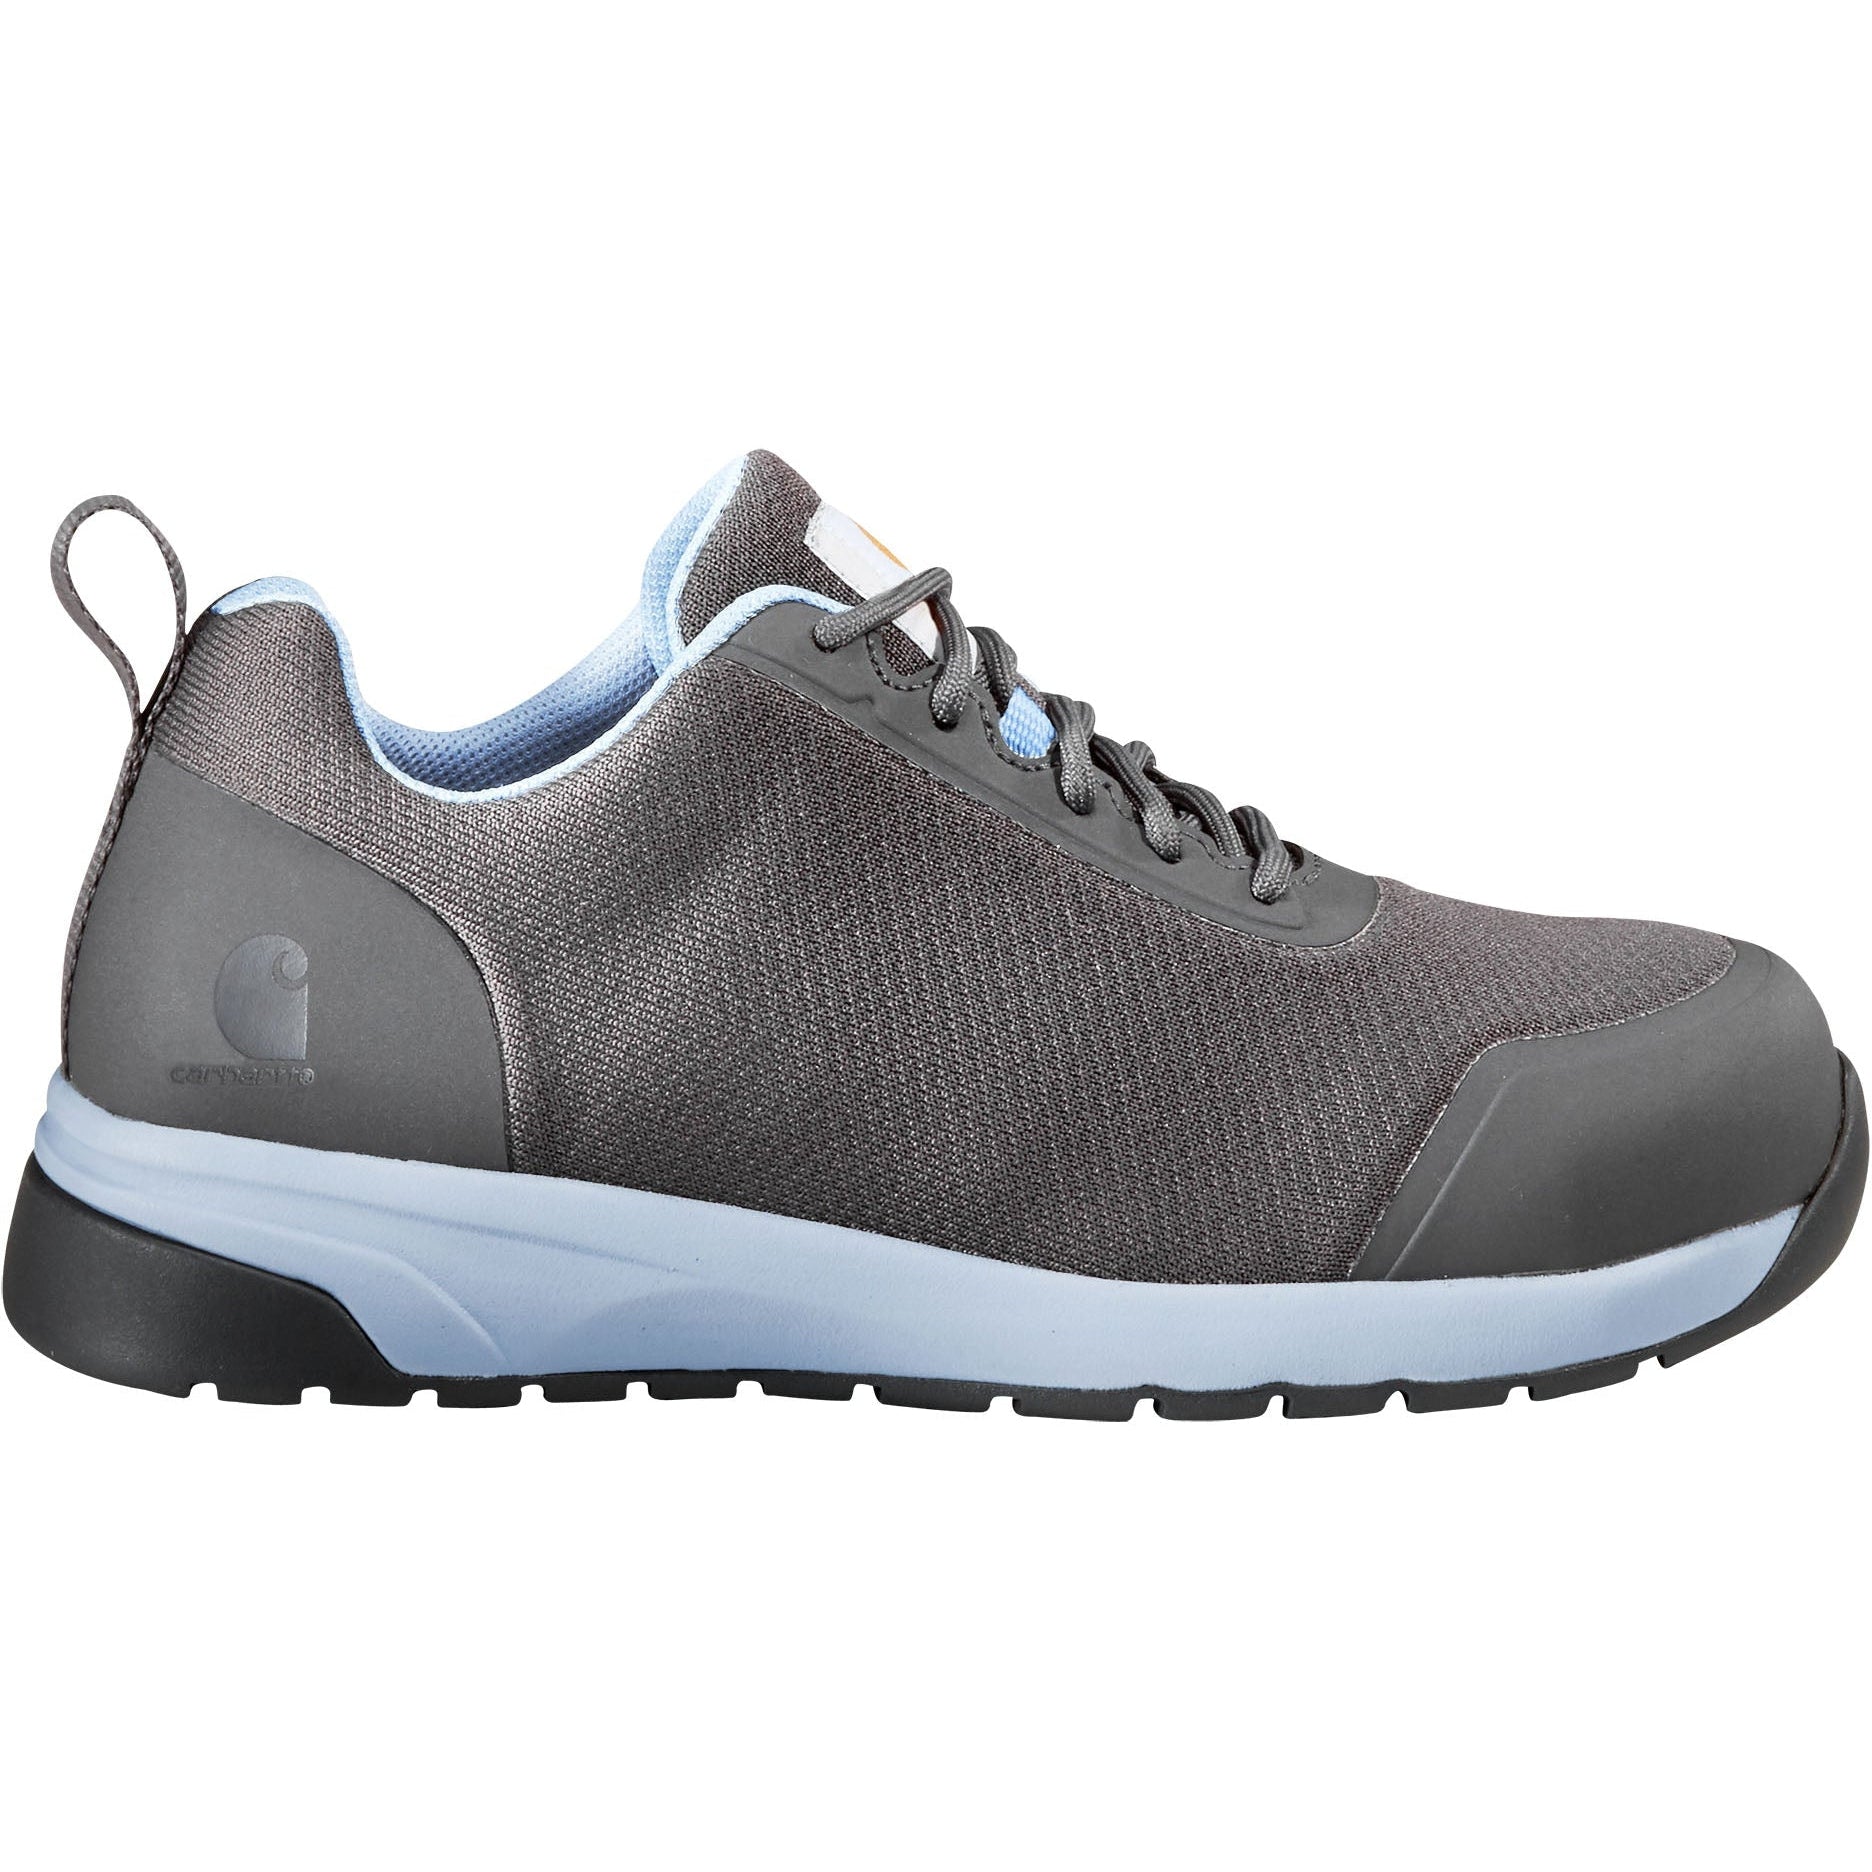 Carhartt Women's Force Nano Composite Toe Work Shoe - Grape- FA3482-W 6 / Medium / Grape - Overlook Boots